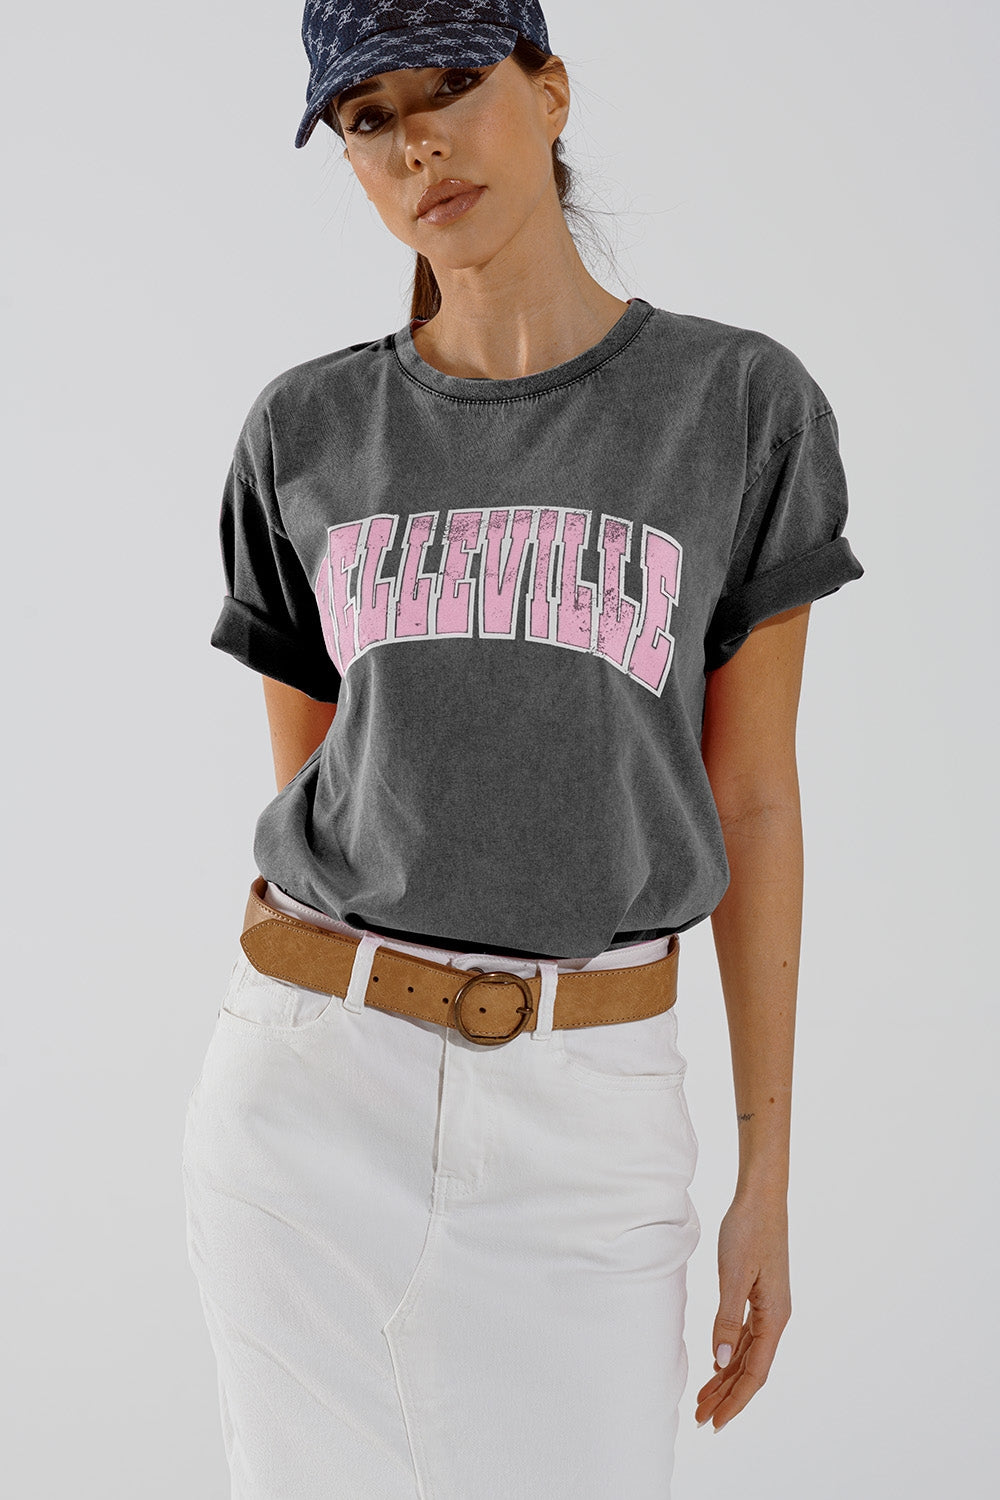 Q2 Grey Crew Neck T-shirt With Belleville text